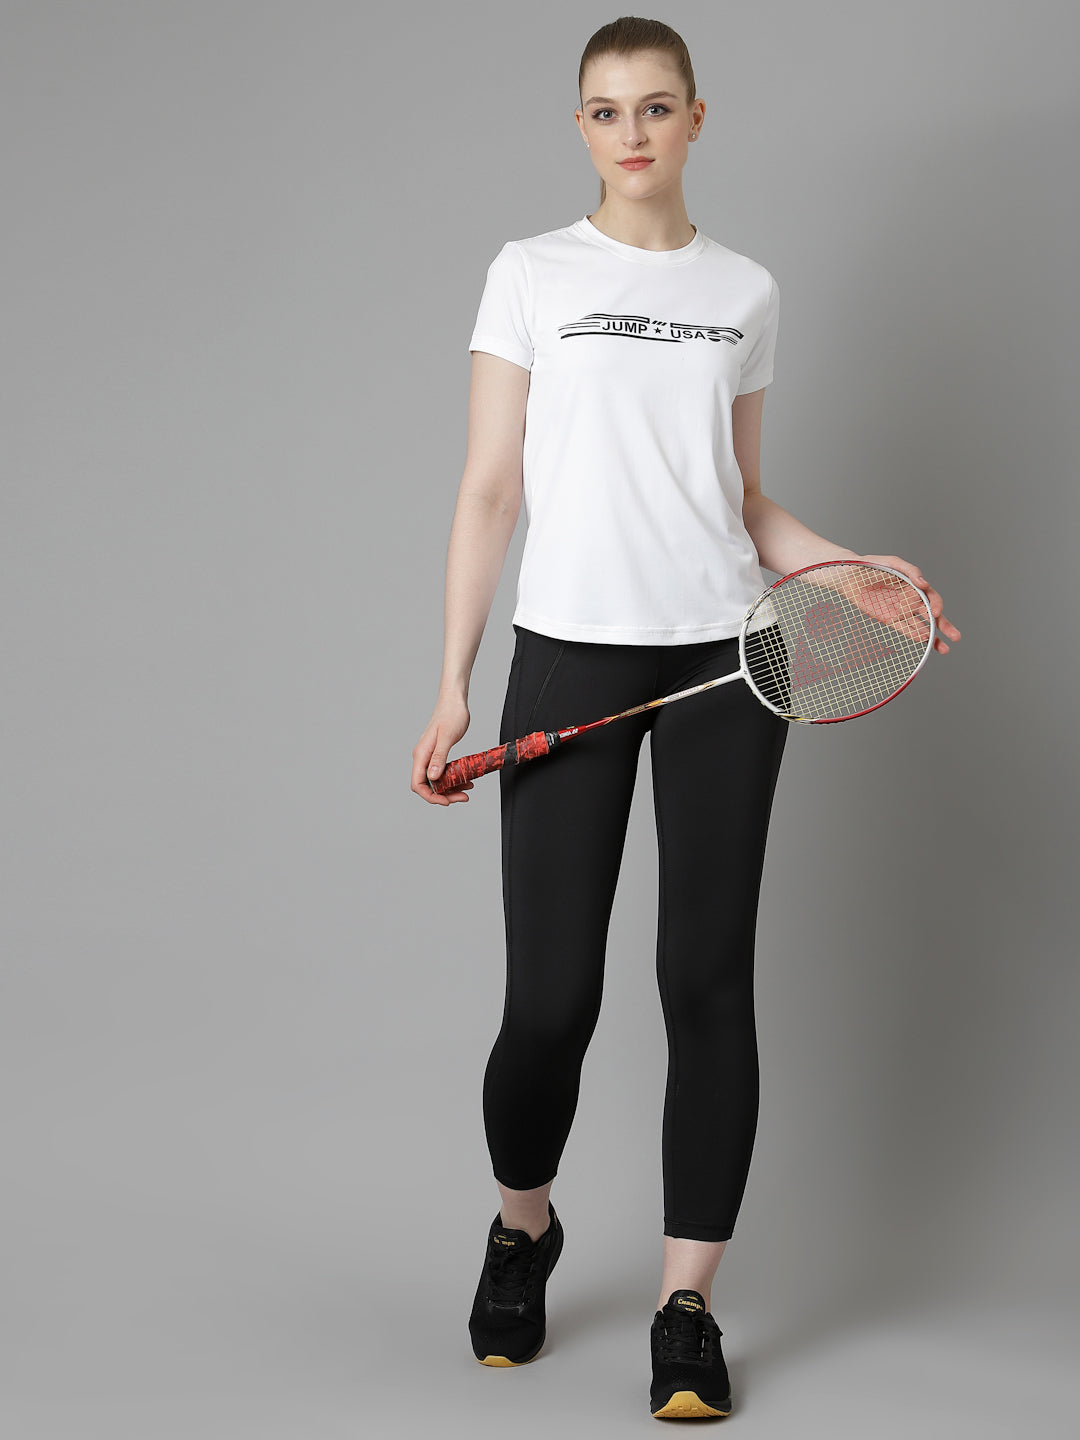 Premium Photo  A woman in a white t - shirt and black leggings